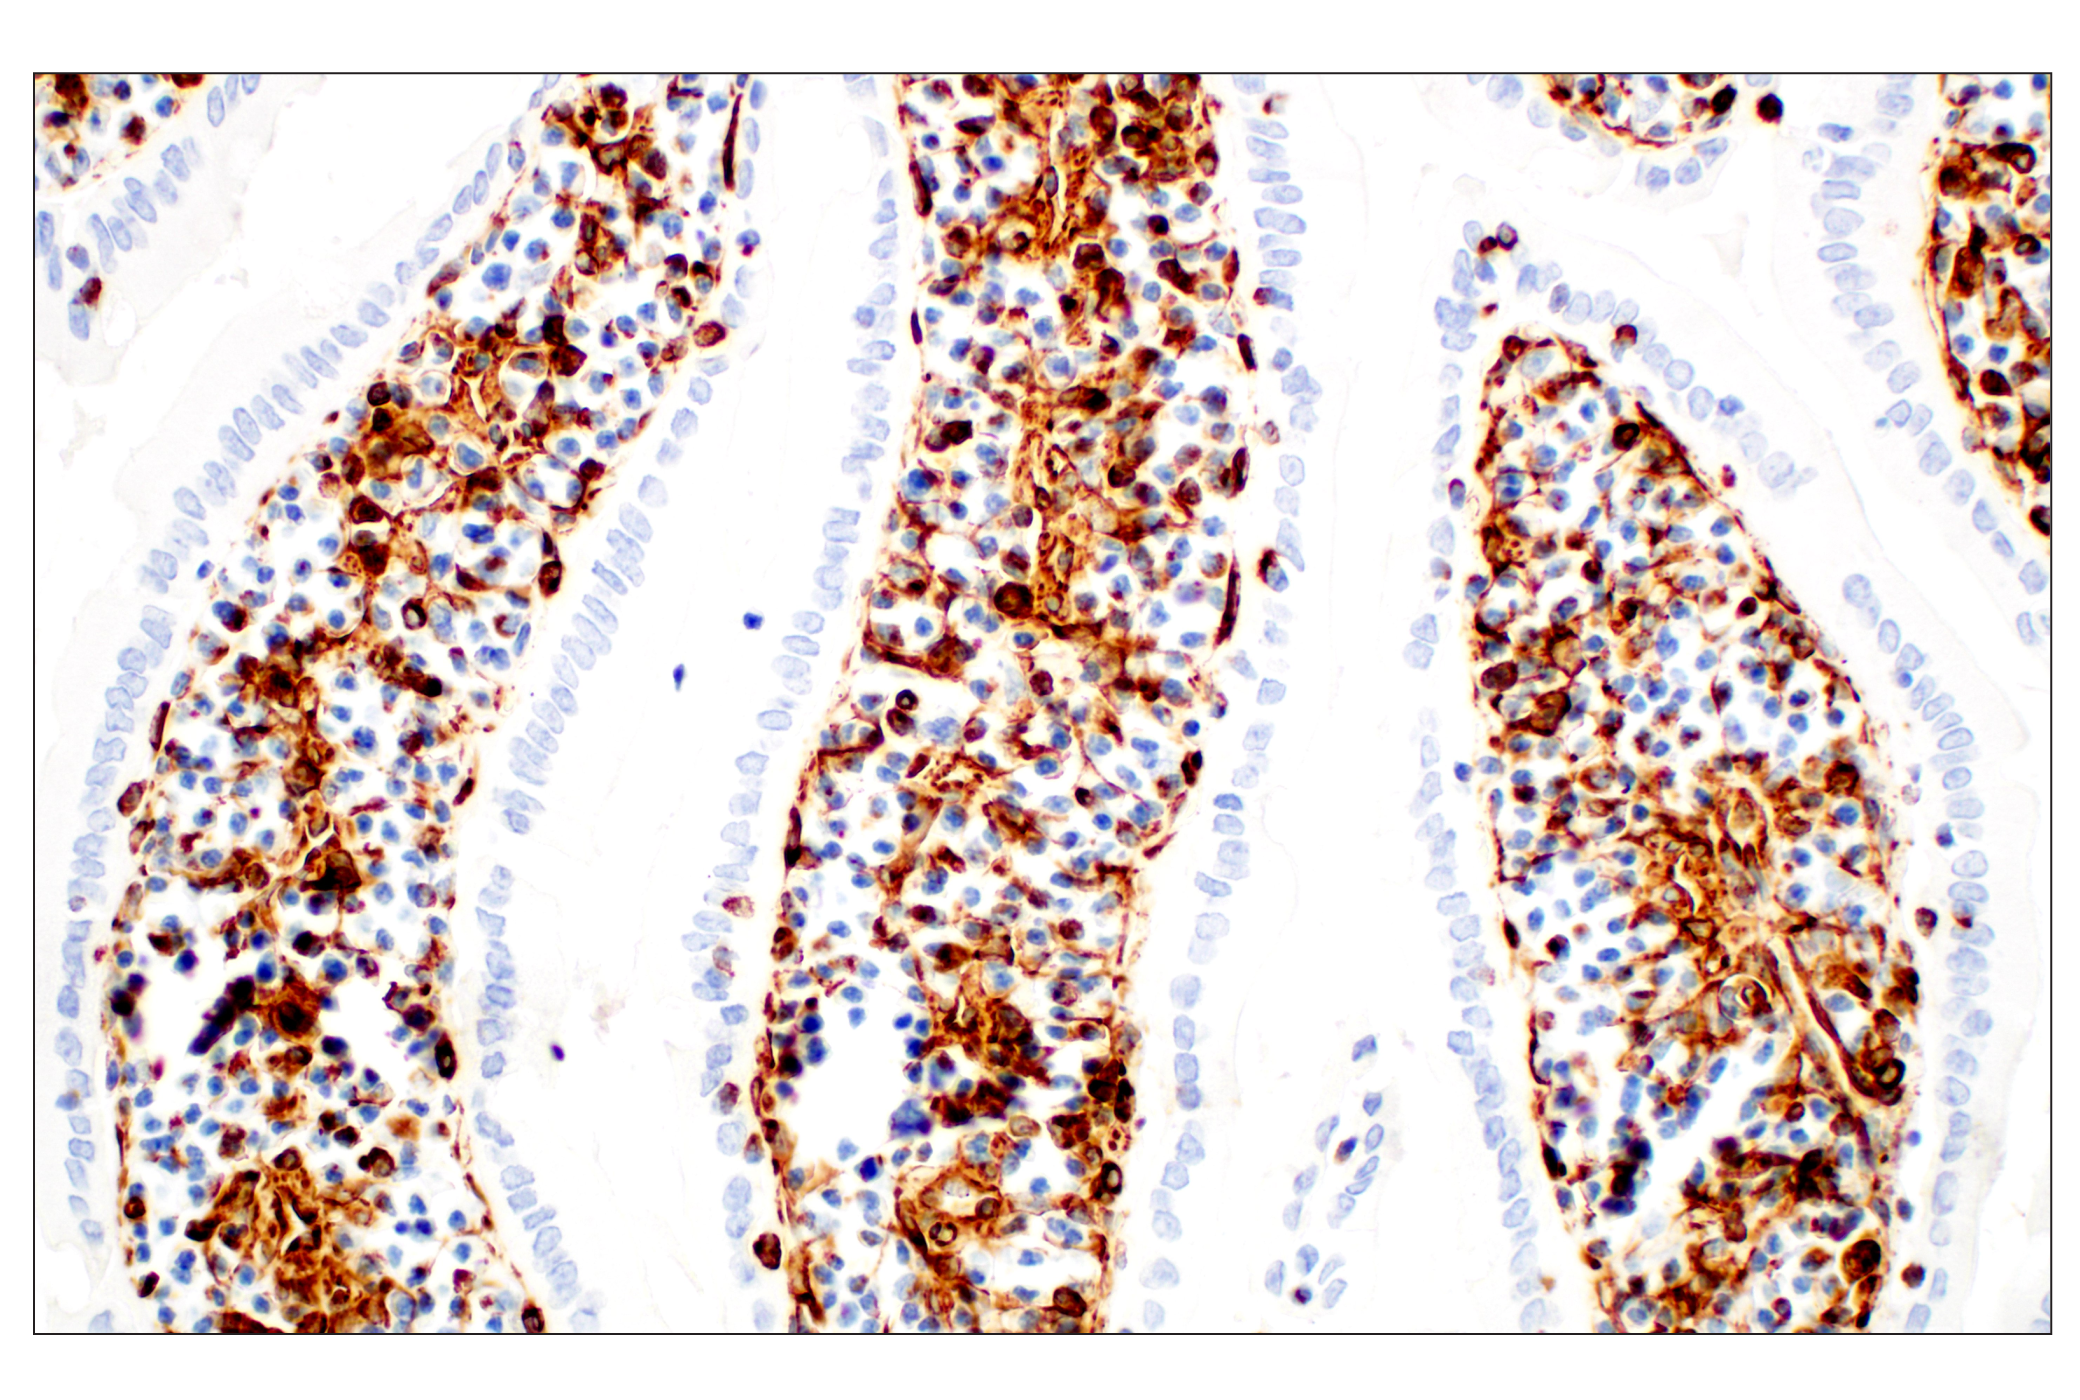  Image 47: Cytoskeletal Marker Antibody Sampler Kit